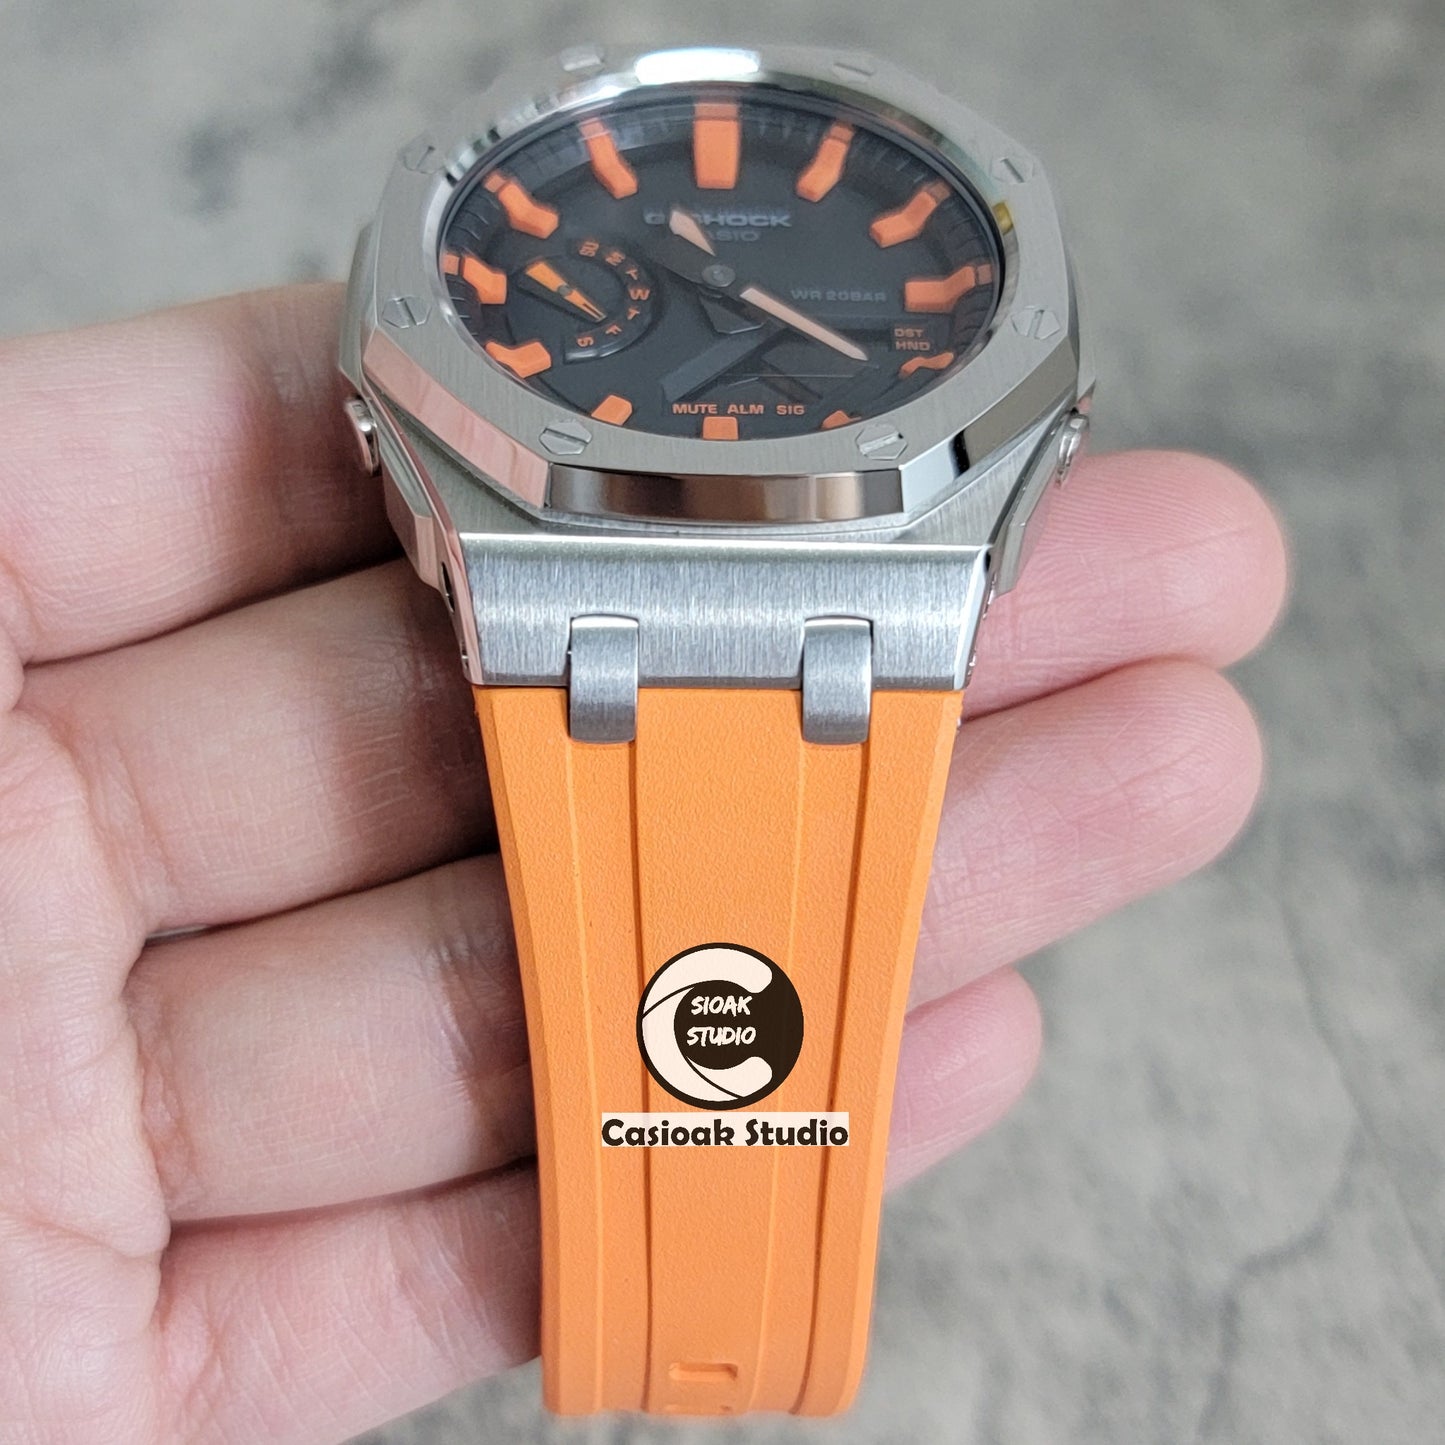 Casioak Mod Watch Offshore Superior Silver Case Orange Rubber Strap Black Orange Time Mark Black Dial 44mm - Casioak Studio